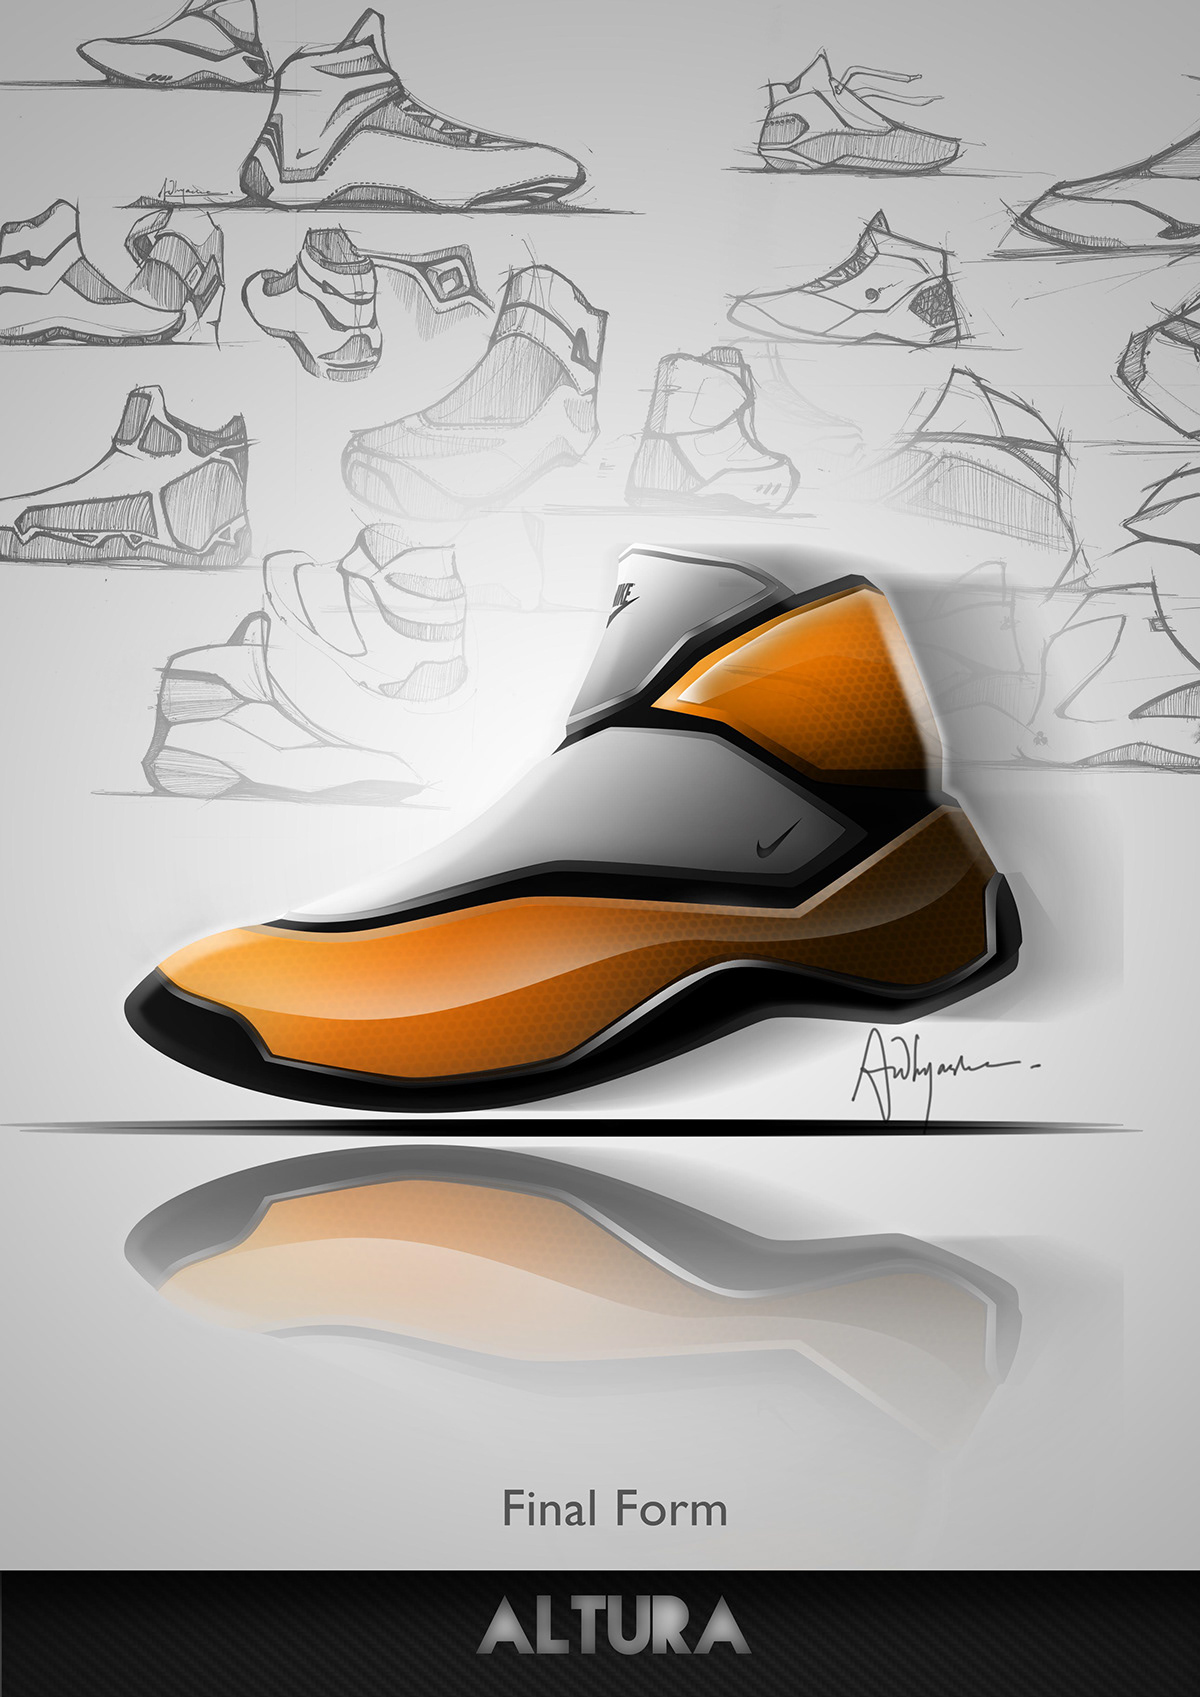 Nike concept shoe